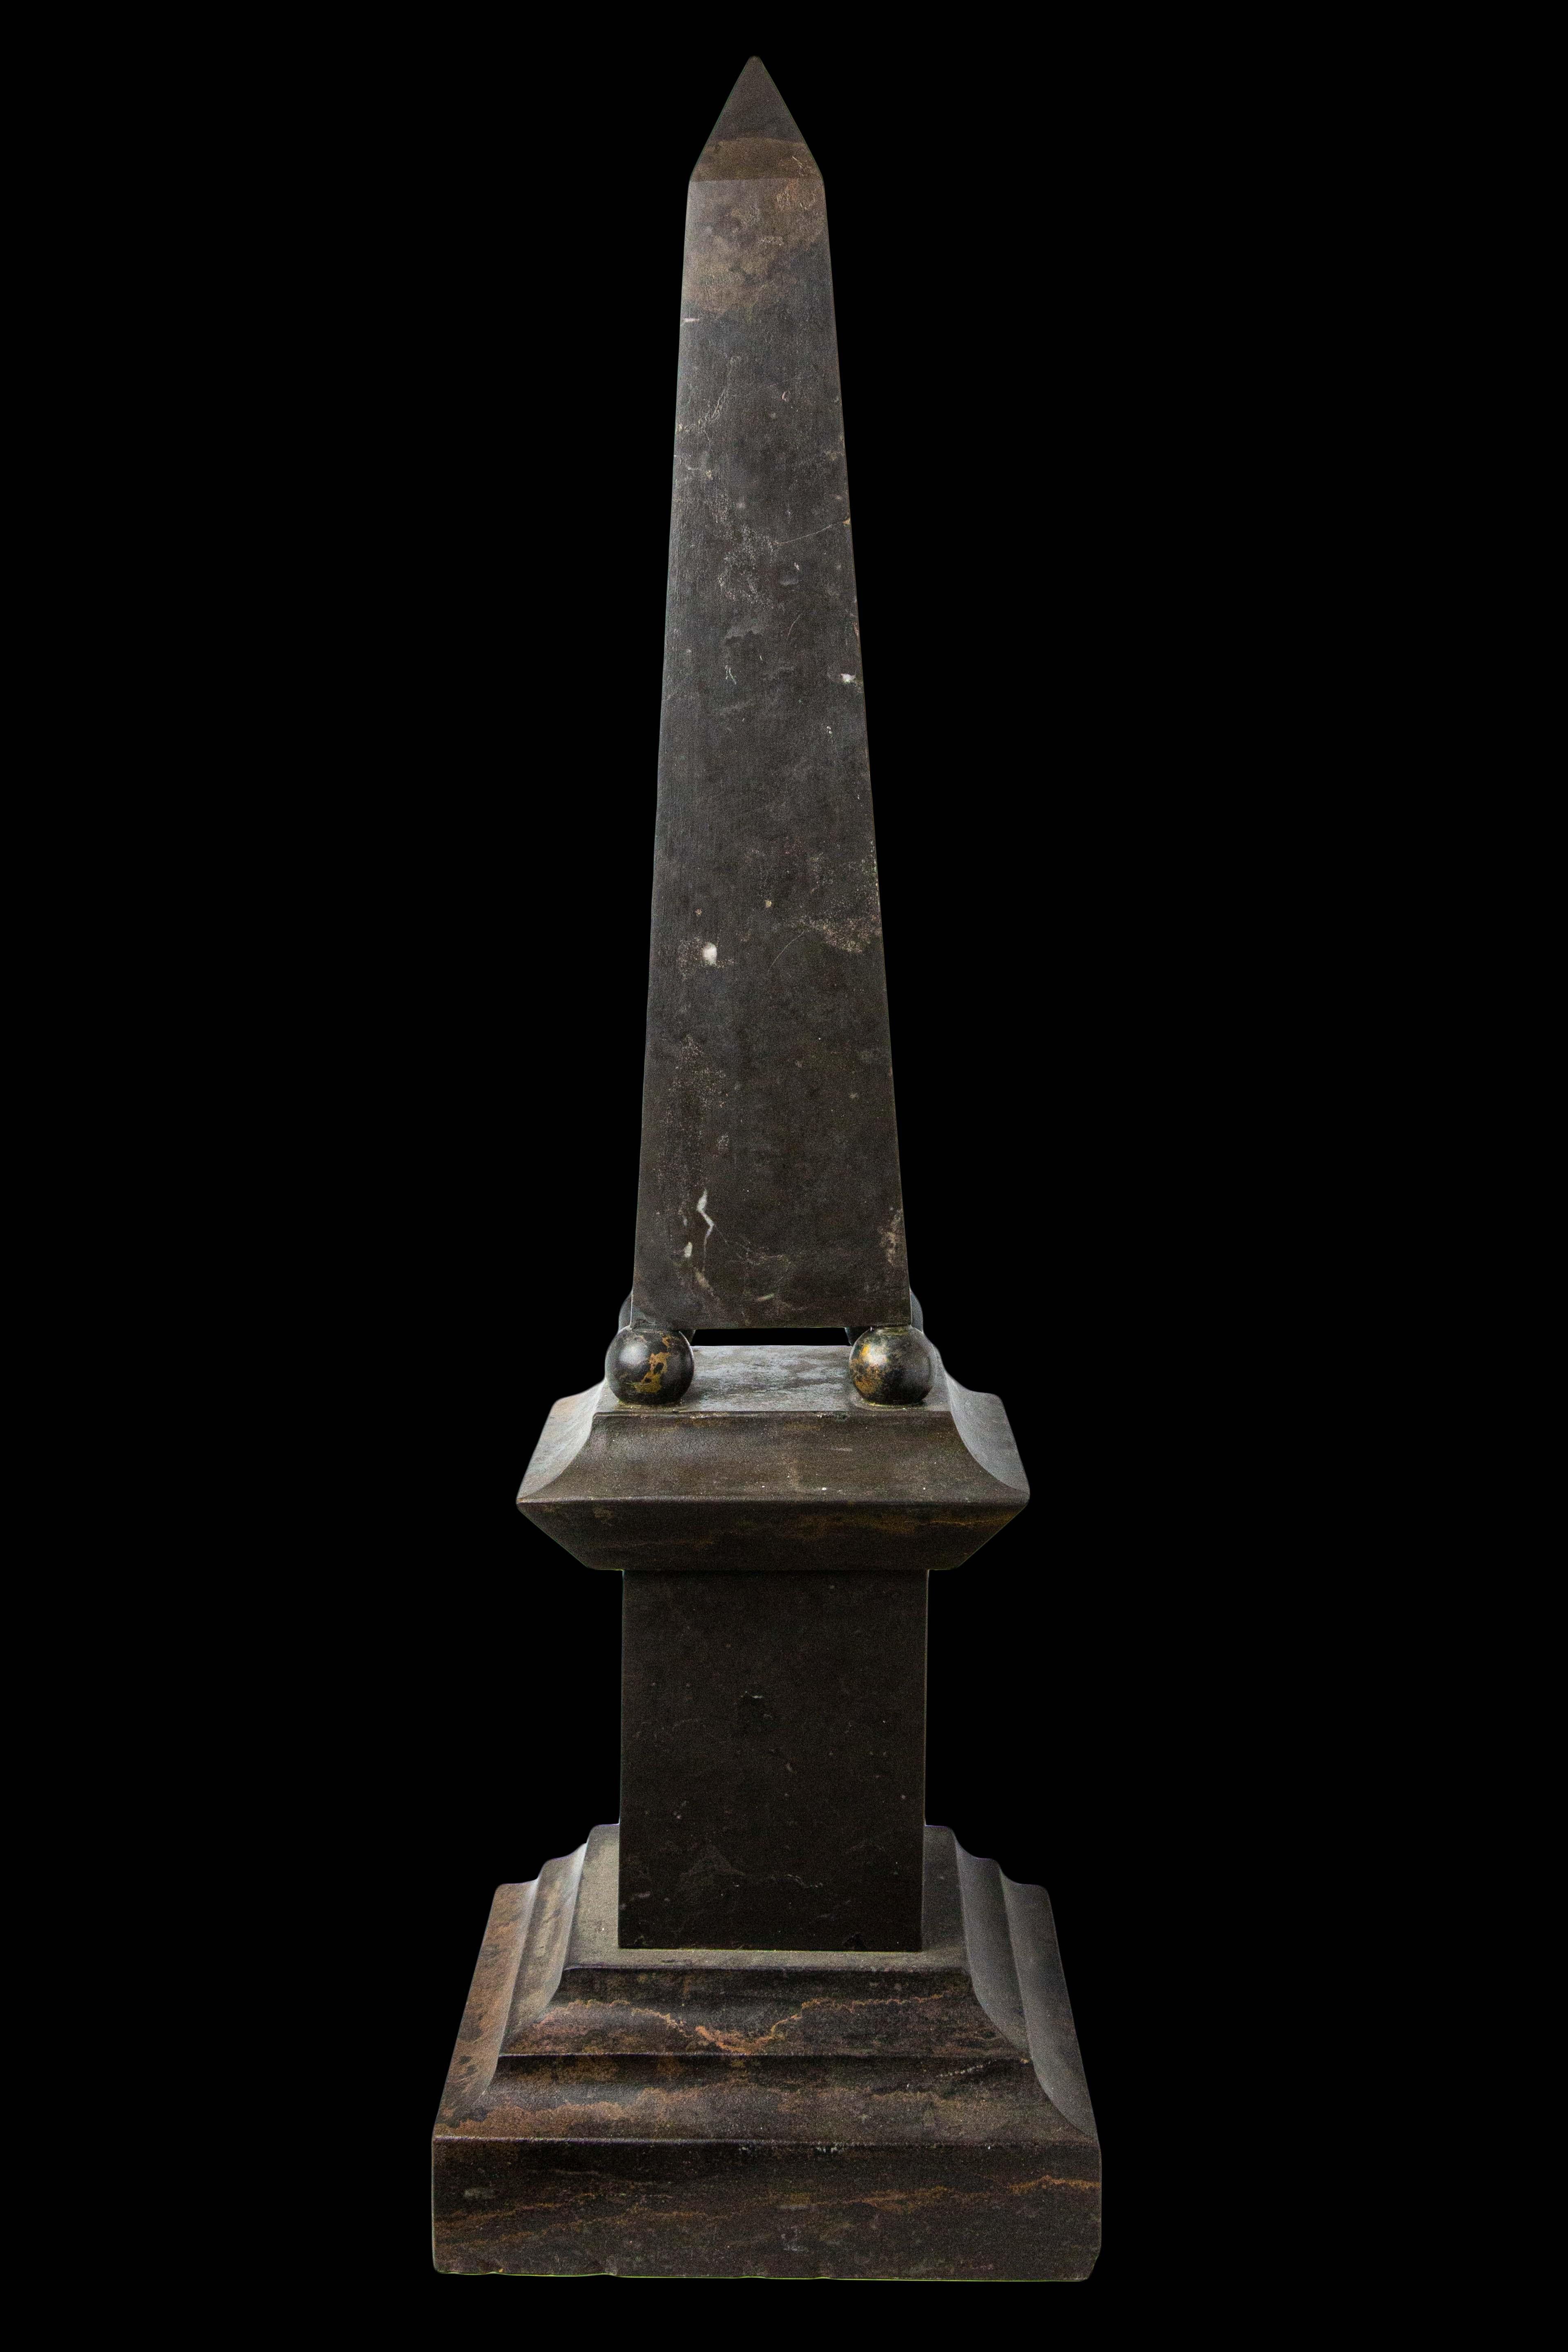 Large Stone and Metal Obelisk:

Measures: 8.5